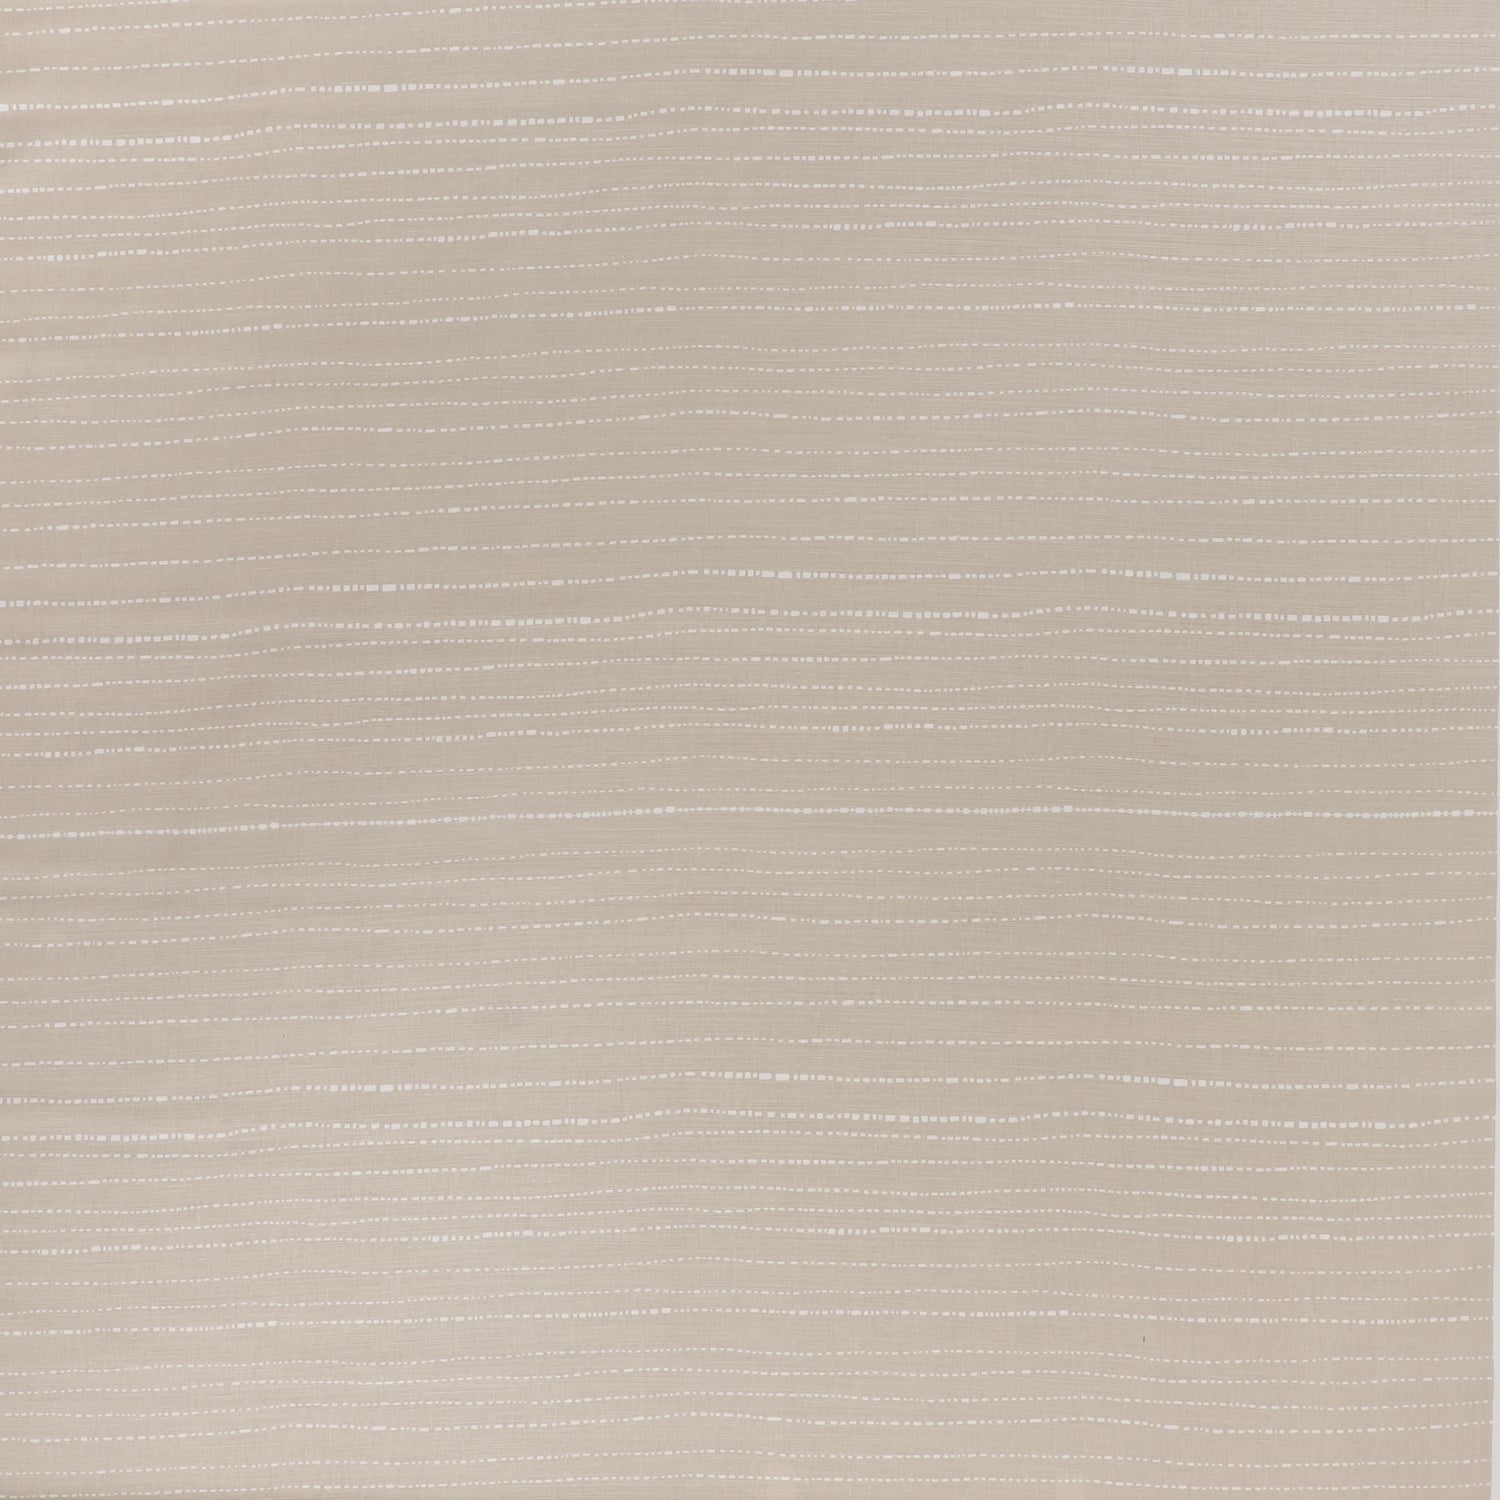 printed cotton fabric in a broken stripe pattern in white on a beige field.